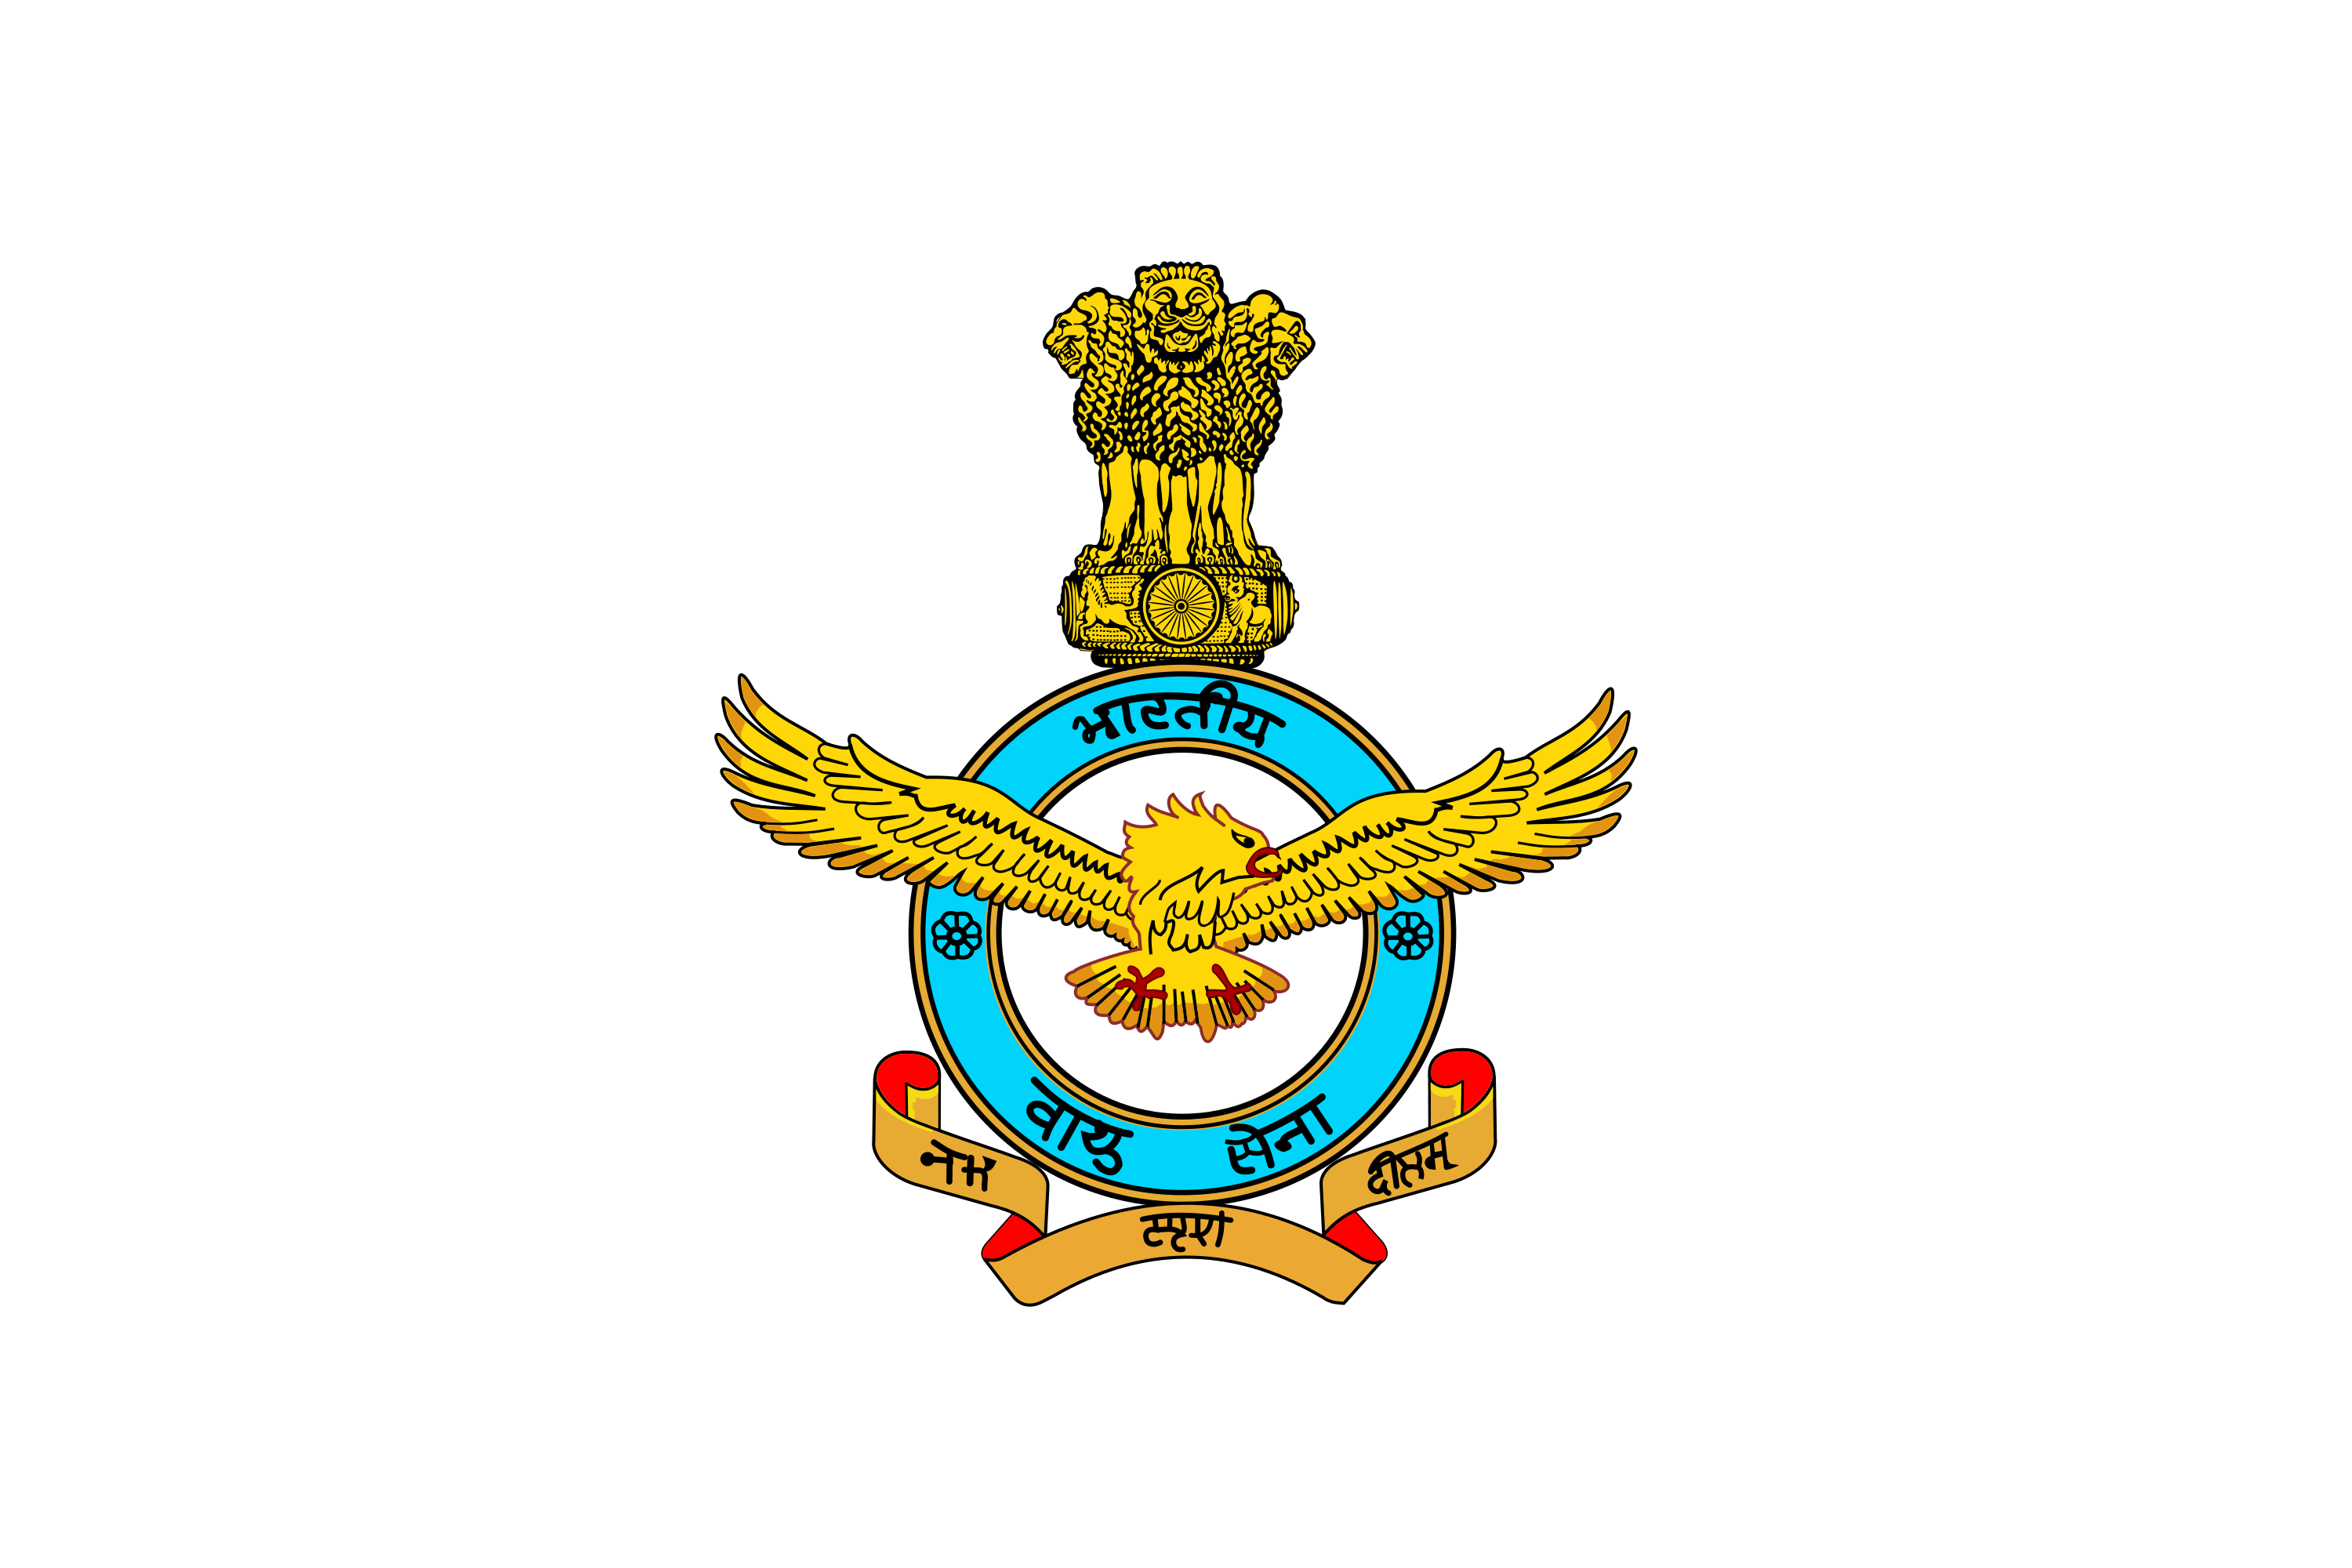 Download Indian Air Force (IAF) Logo in SVG Vector or PNG File Format - Logo.wine